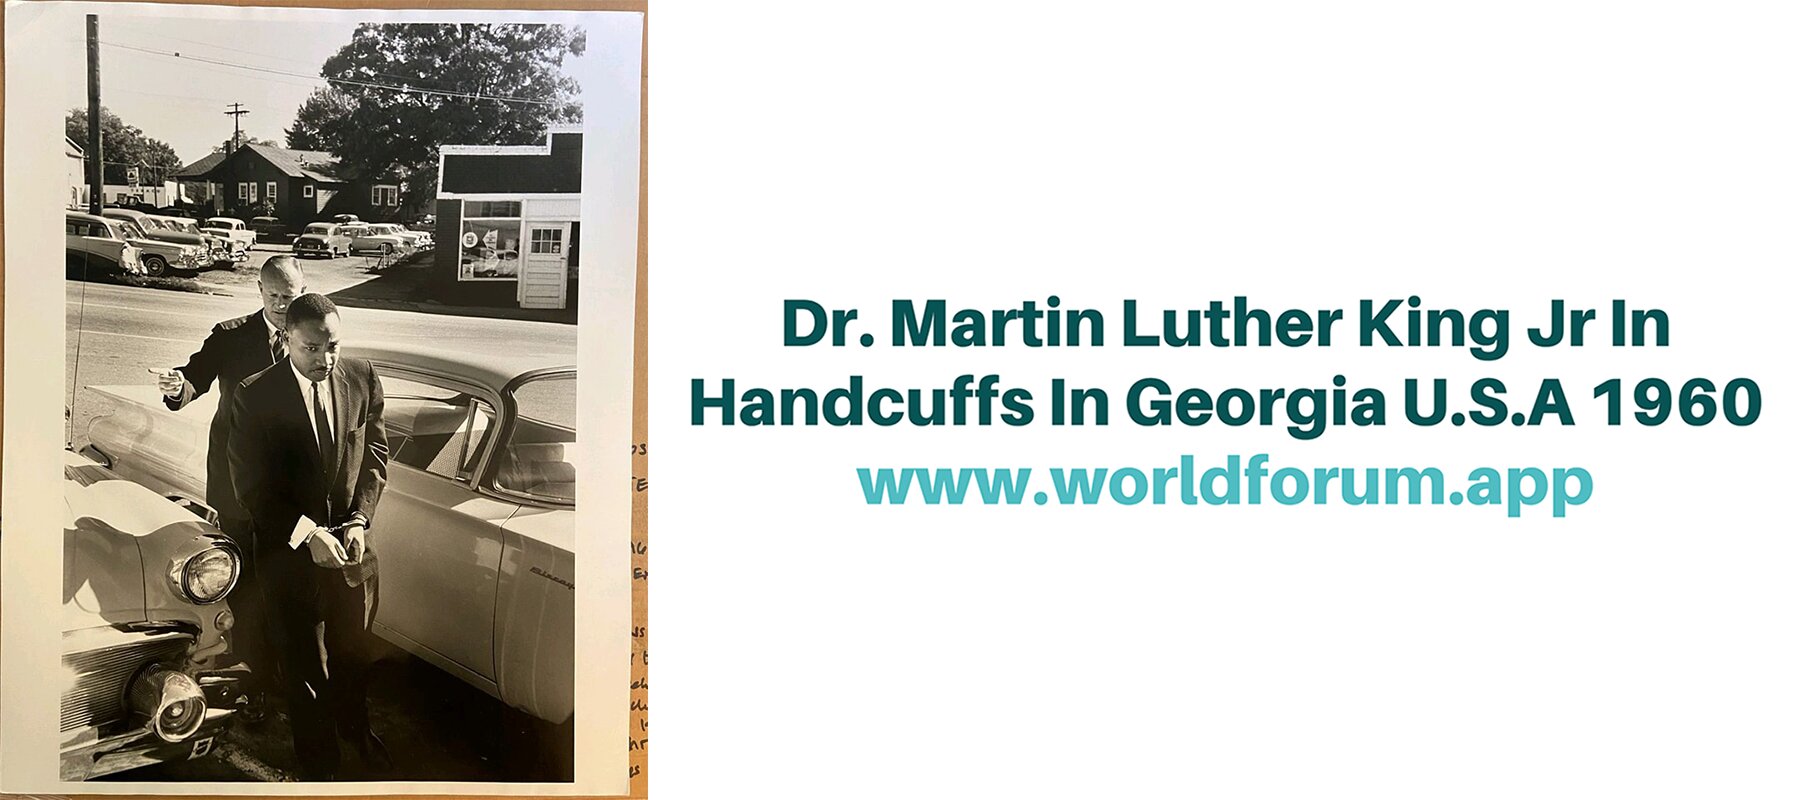 Dr.-Martin-Luther-King-Jr-In-Handcuffs-In-Georgia-U.S.A-1960.jpg